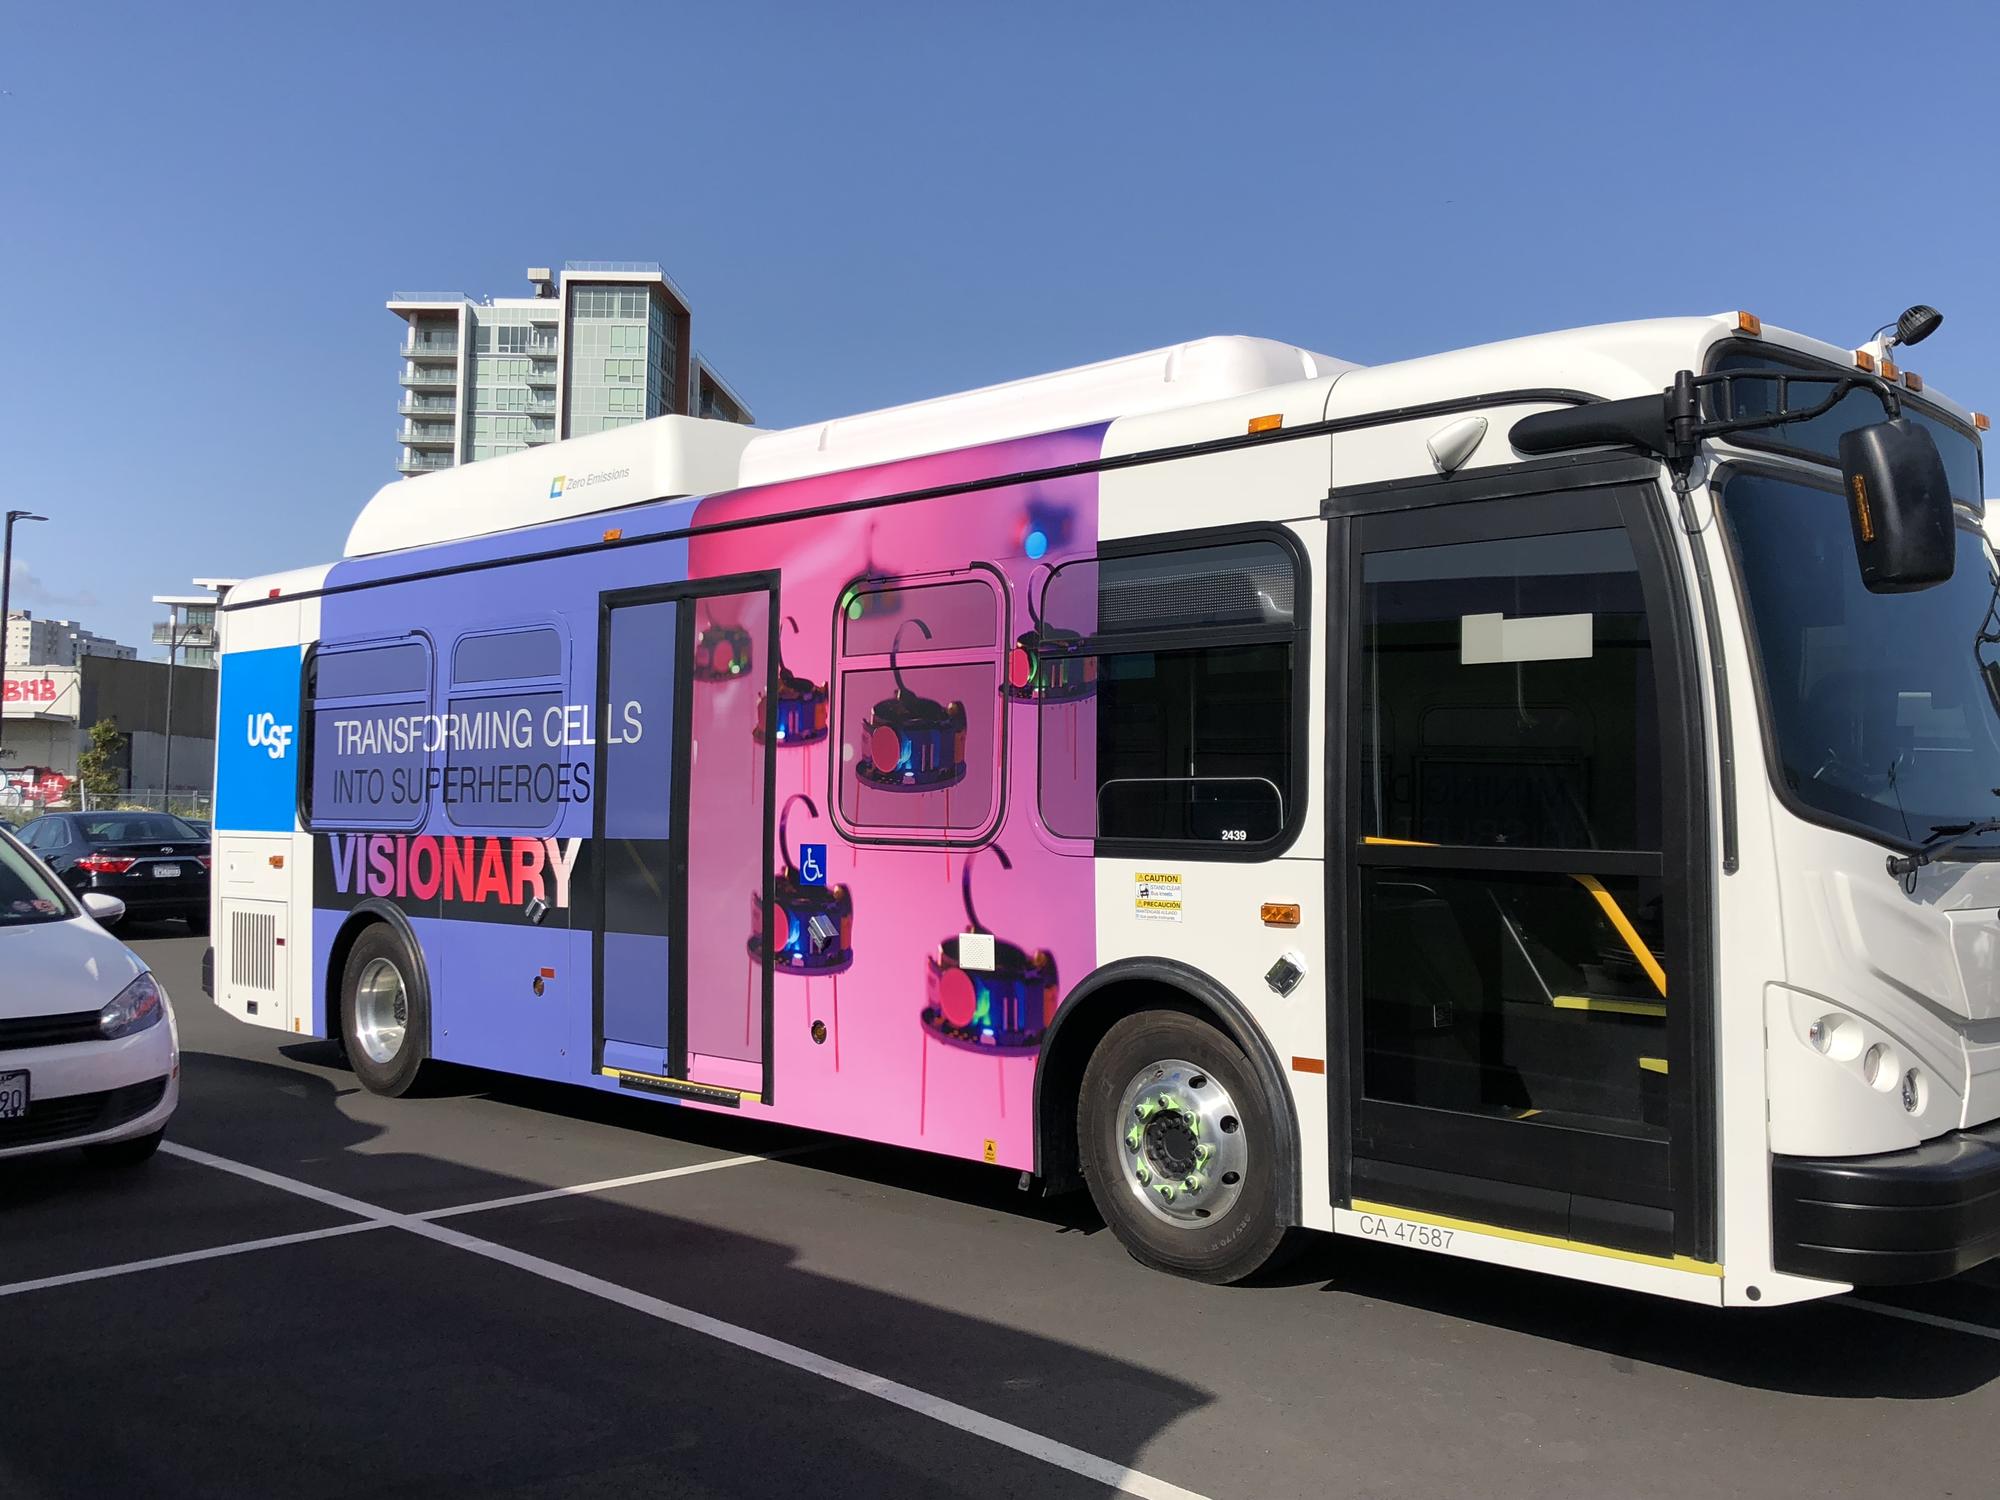 Kilobots image on the UCSF Bus